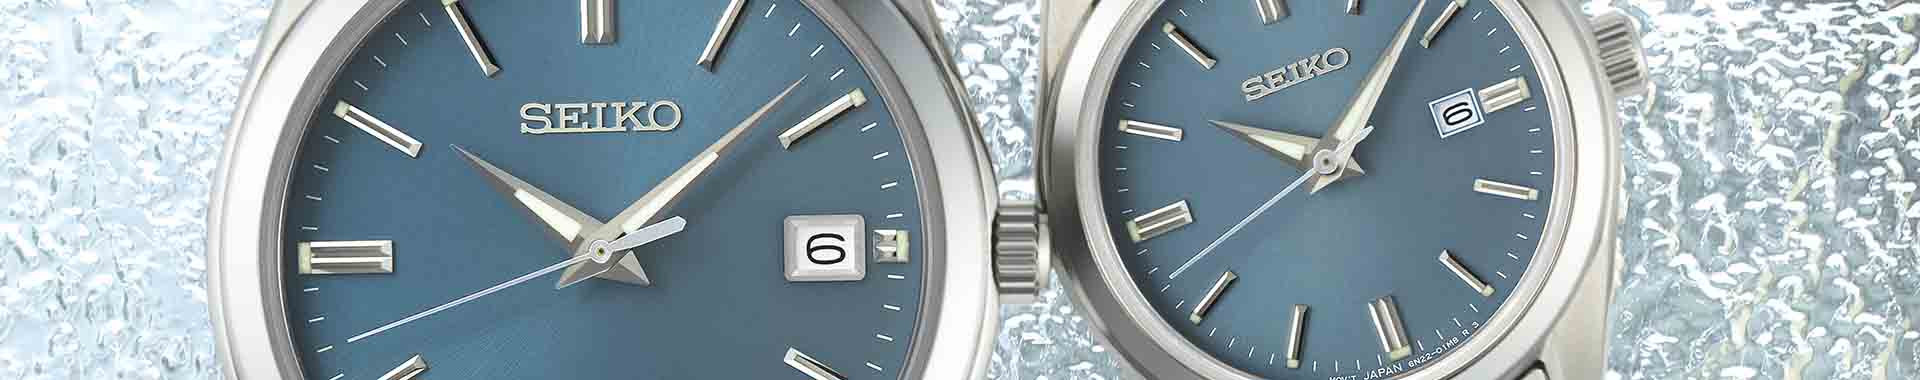 Klassische Herrenuhren - Seiko Uhrenklassiker | Seiko Boutique